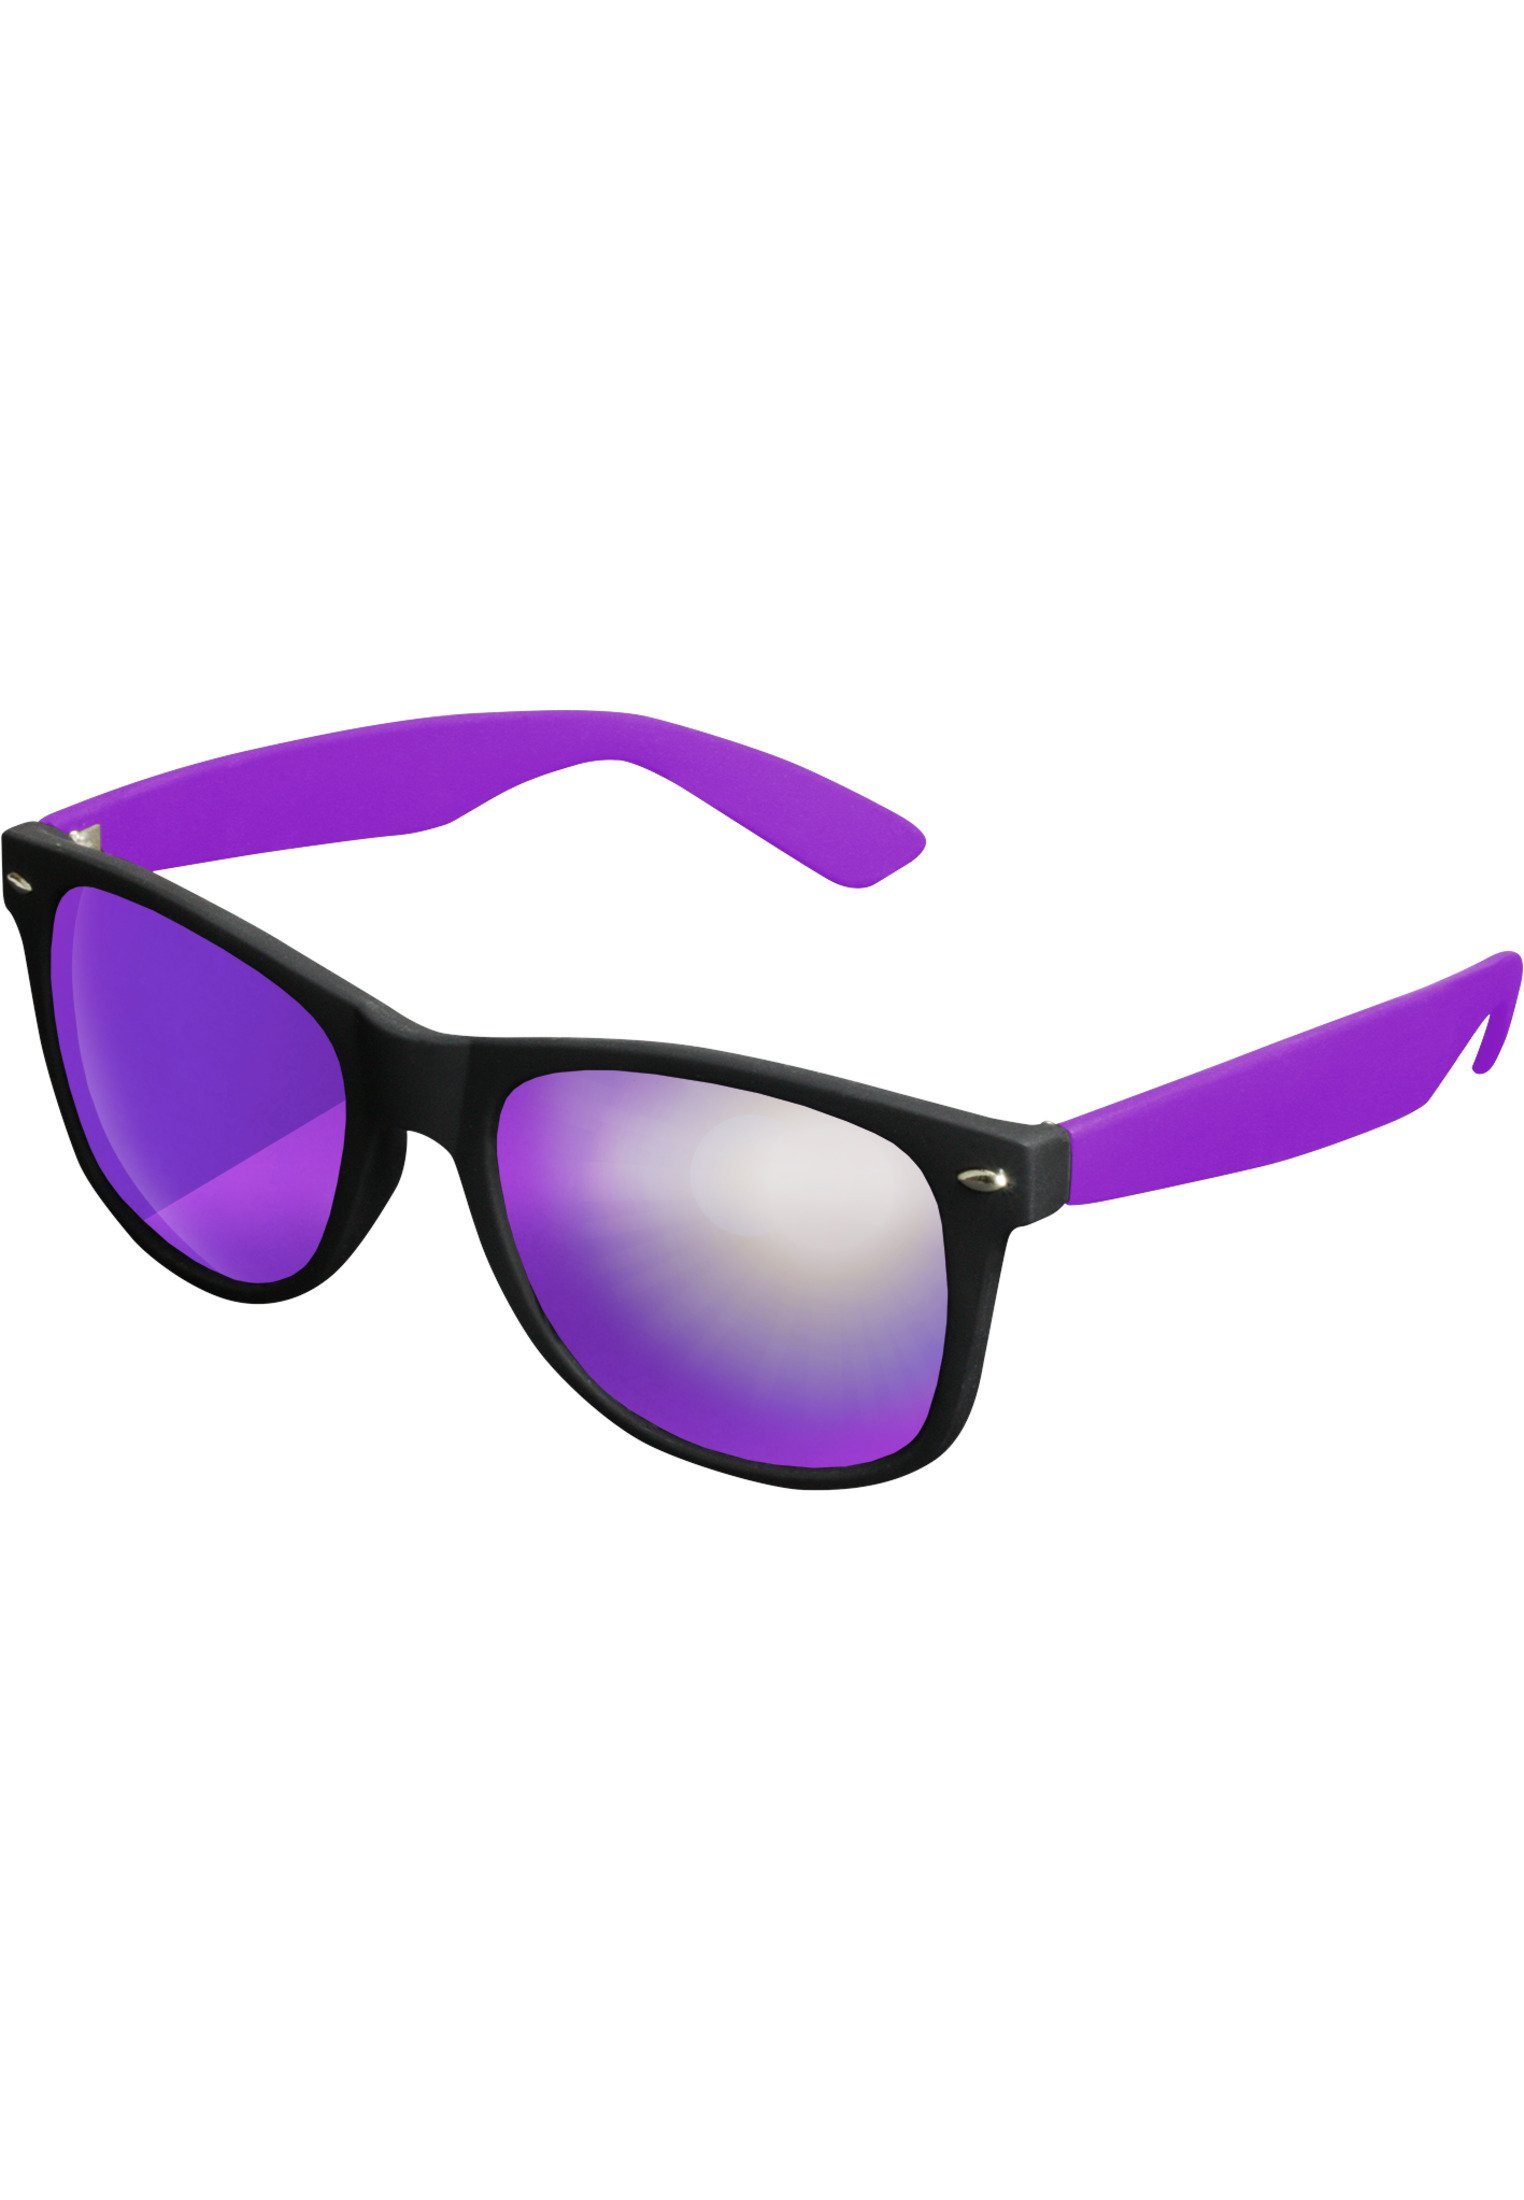 Sunglasses Mirror MSTRDS blk/pur/pur Likoma Sonnenbrille Accessoires